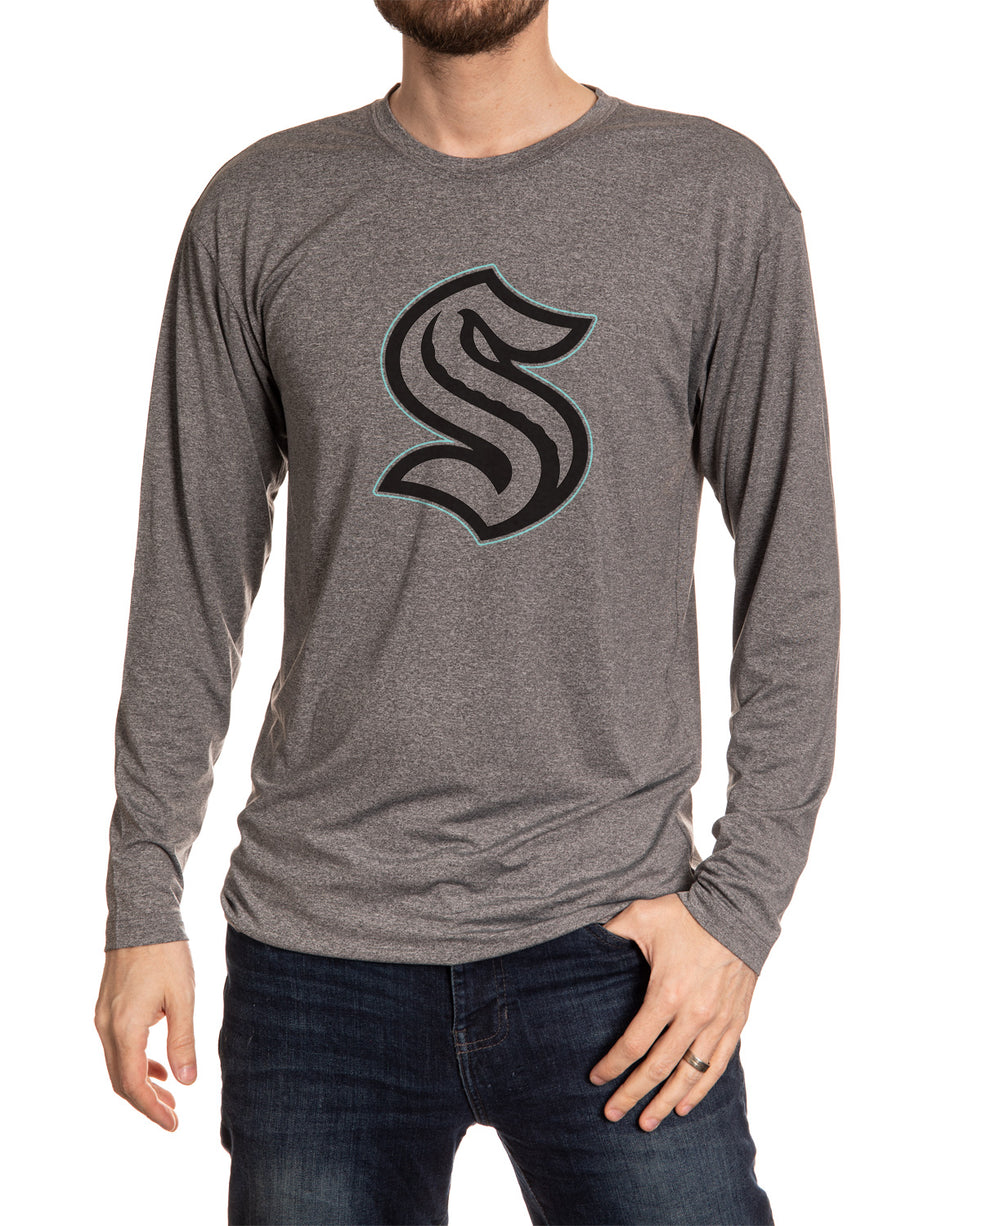 NHL Men's Seattle Kraken Distressed-Print Grey Logo Long Sleeve T